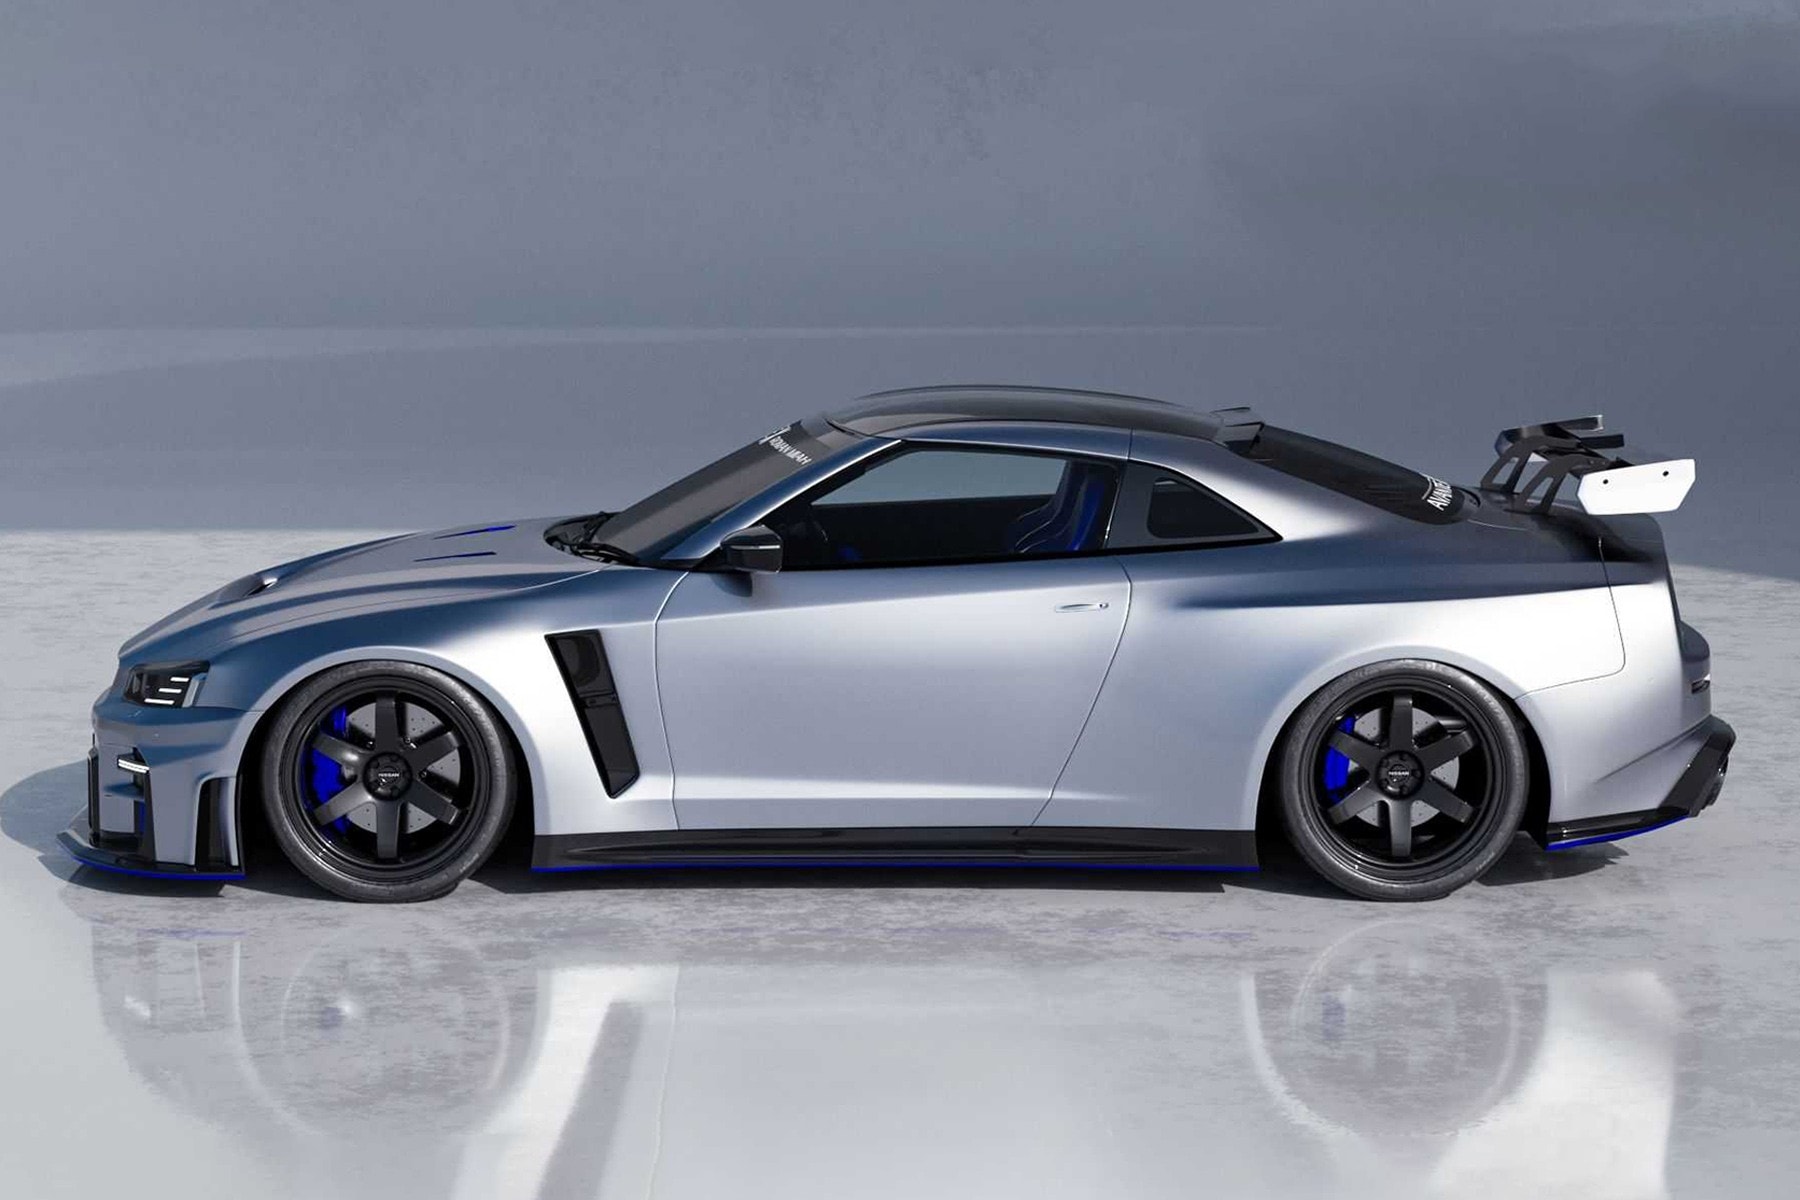 2023 R36 Nissan Skyline GT-R concept by Roman Miah and Avante Design-4 -  Paul Tan's Automotive News